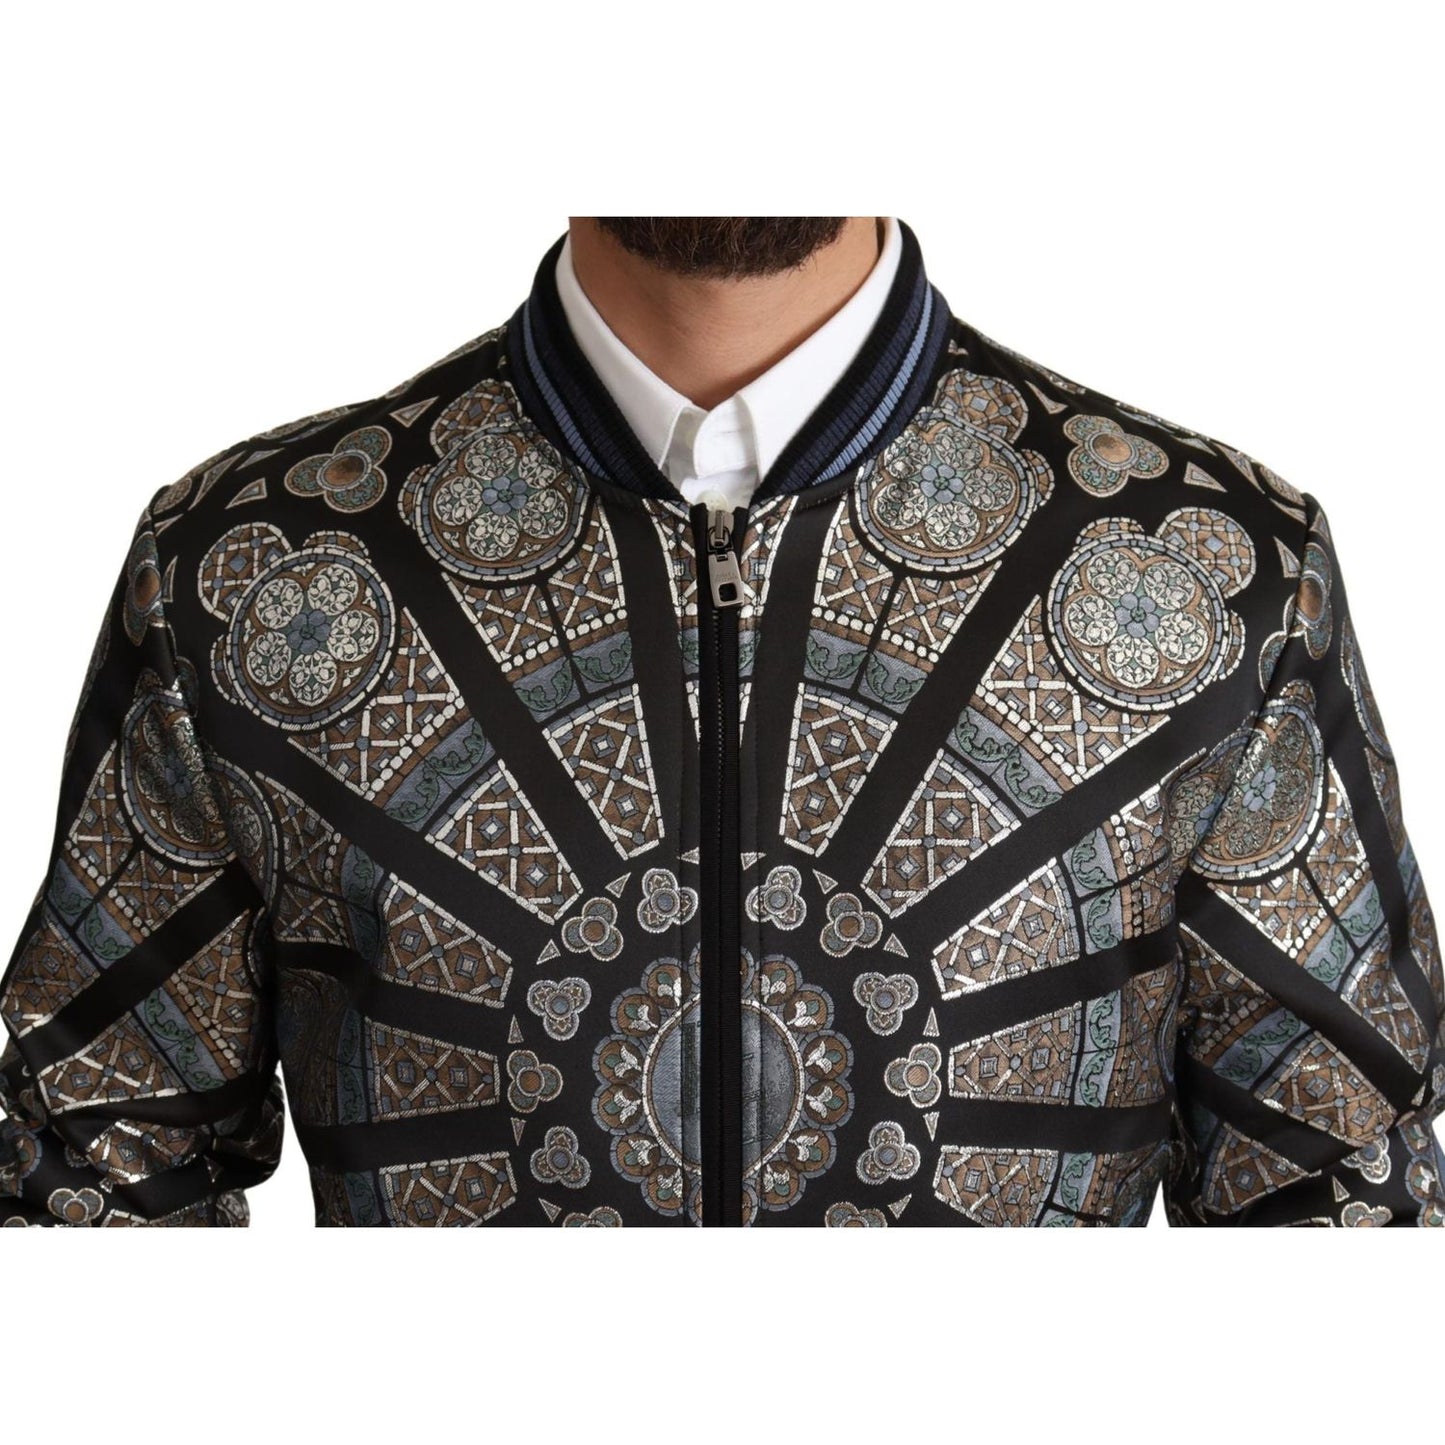 Dolce & Gabbana Elegant Jacquard Bomber Jacket in Blue blue-jacquard-motive-bomber-coat-mens-jacket IMG_2744-scaled-c140e6e1-116.jpg